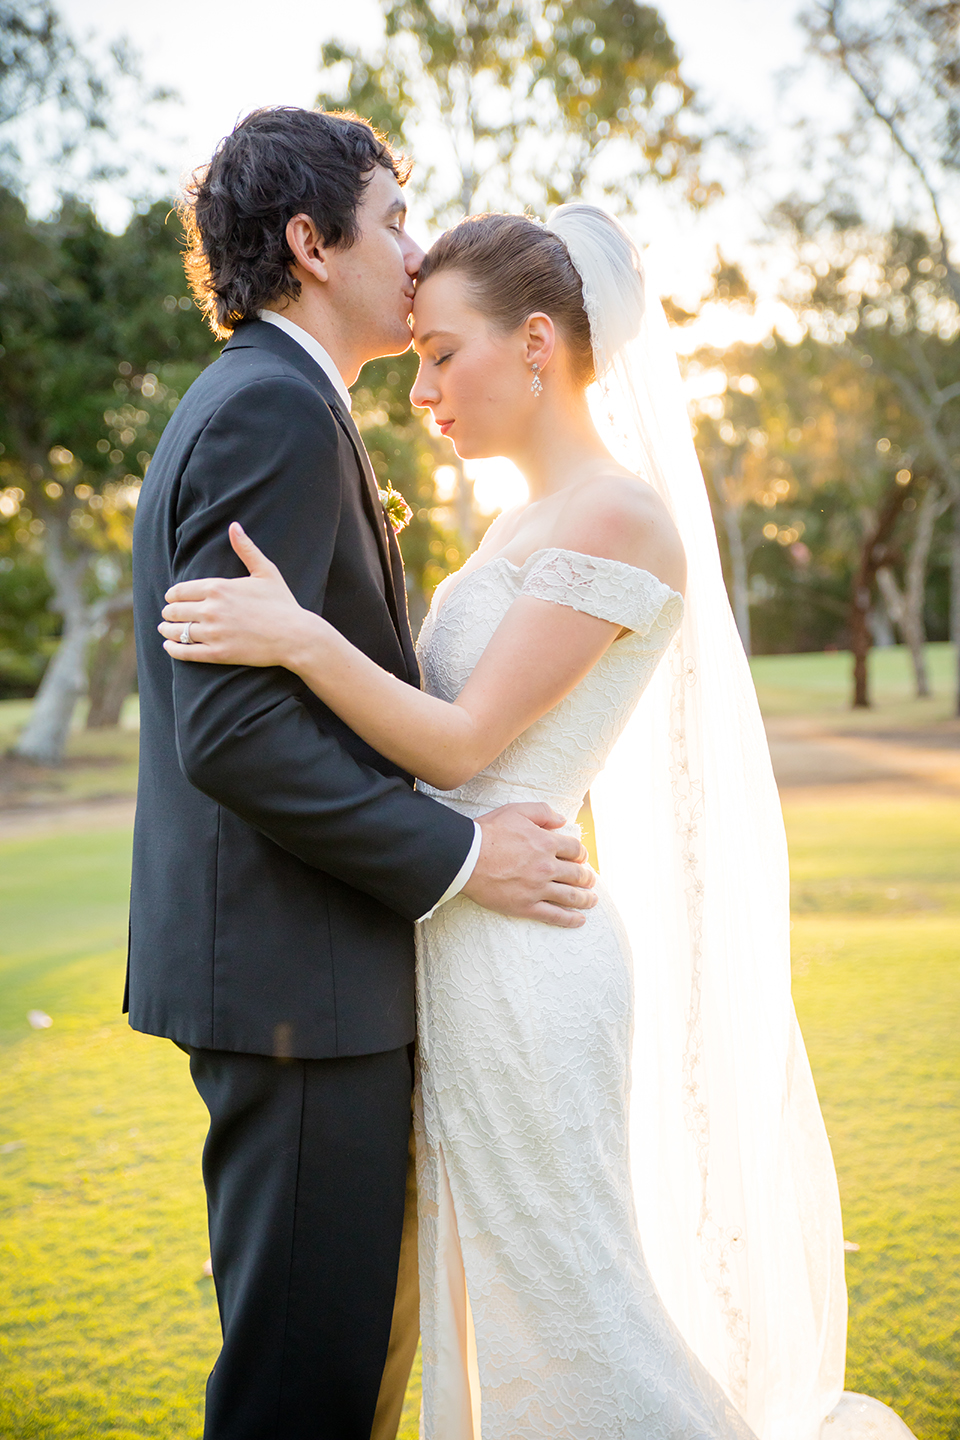 Brisbane Wedding Photographer, Fiona K Photography